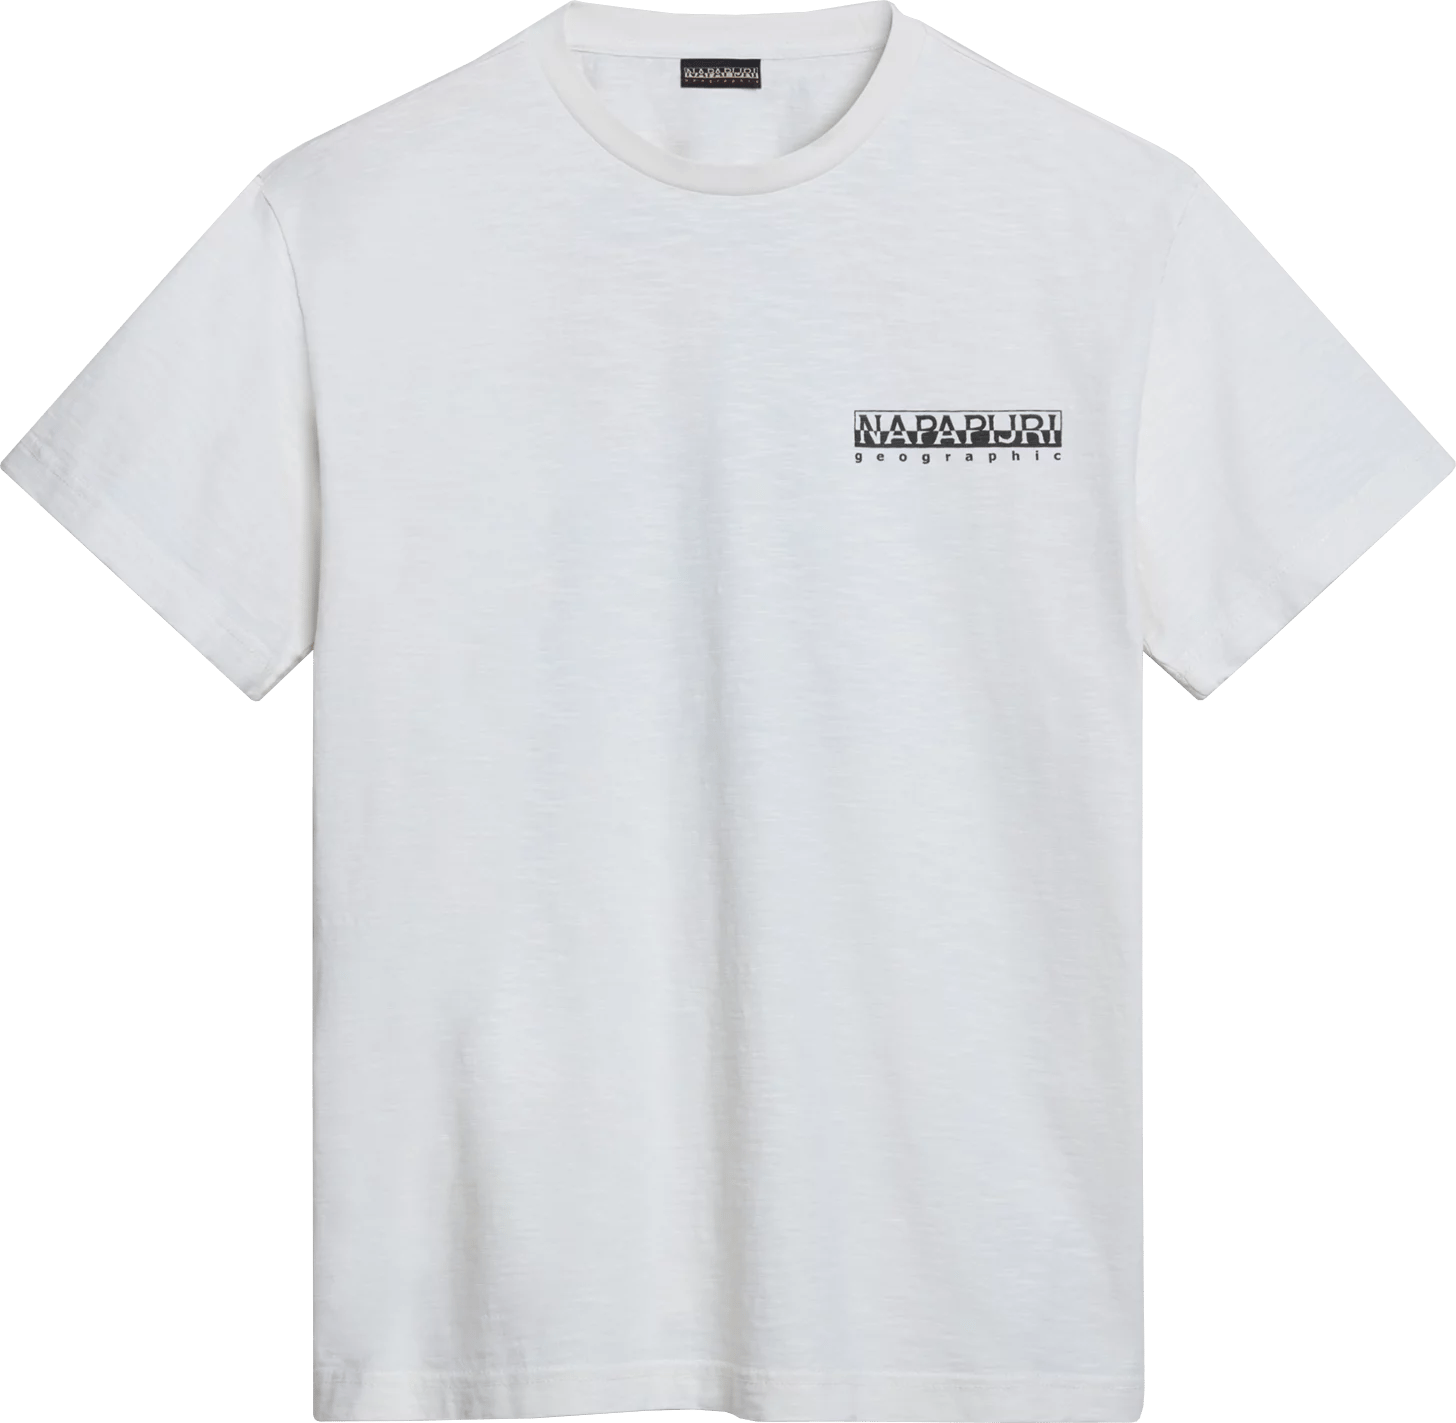 Napapijri Unisex Martre Short Sleeve T-Shirt Beige Sand